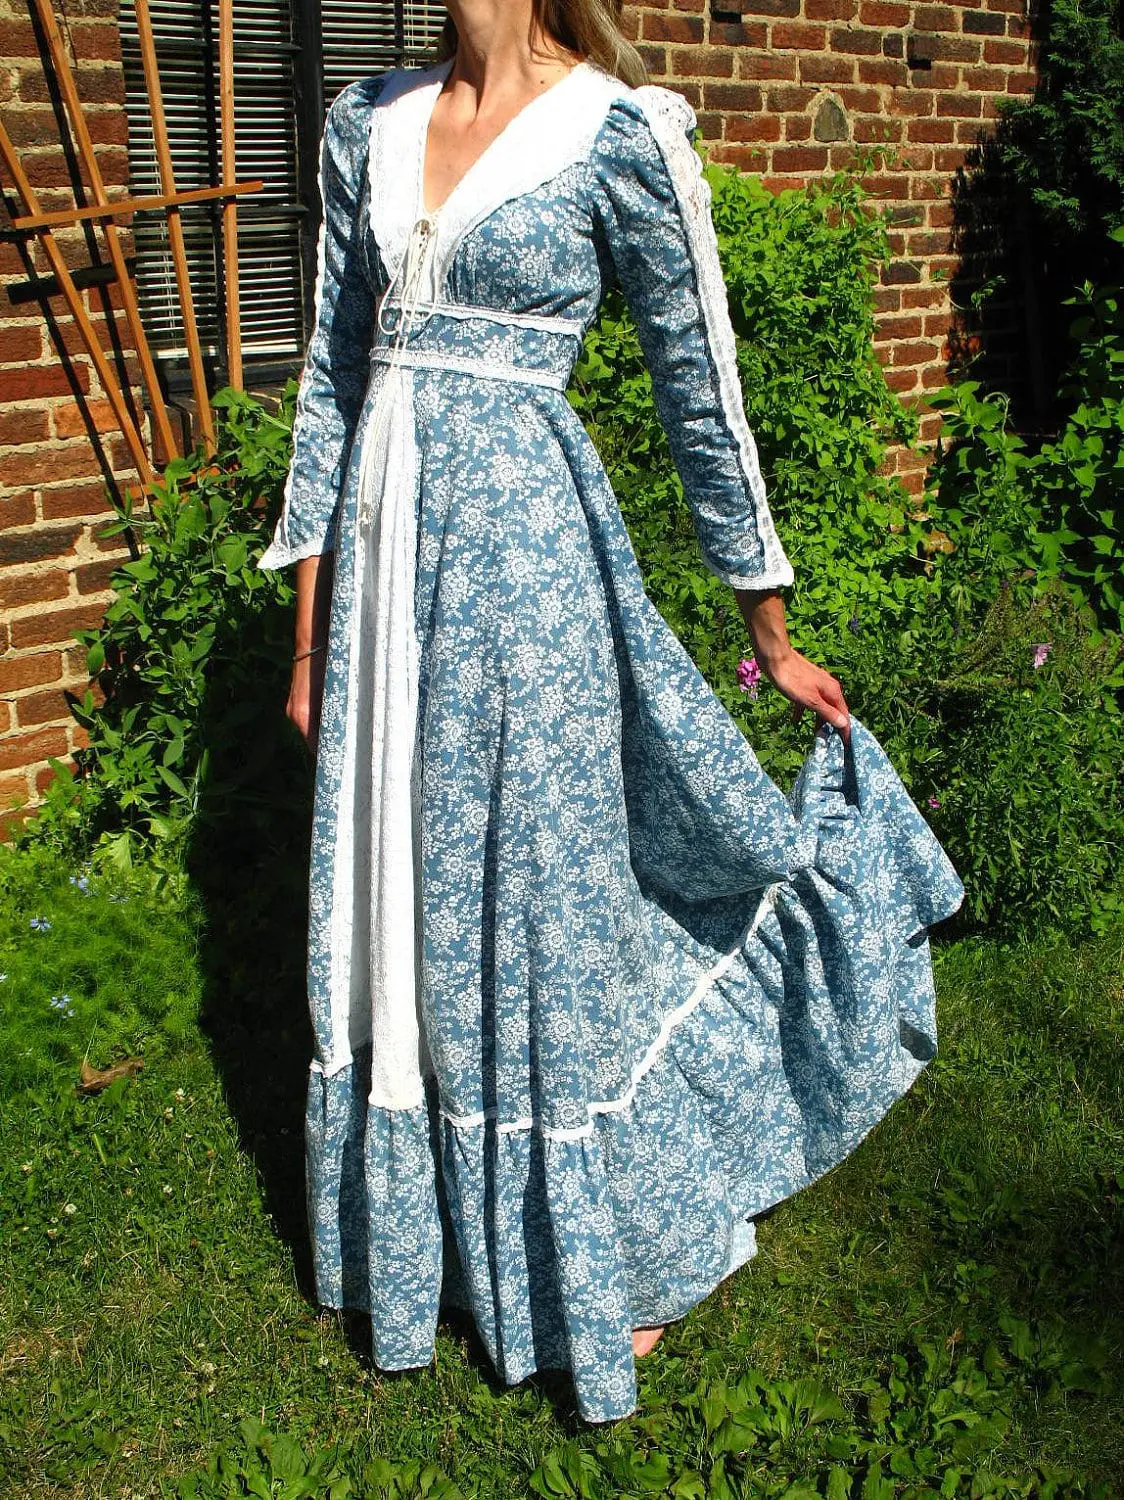 Gunne Sax dress reminiscent of little house on the prairie. Source: etsy.com